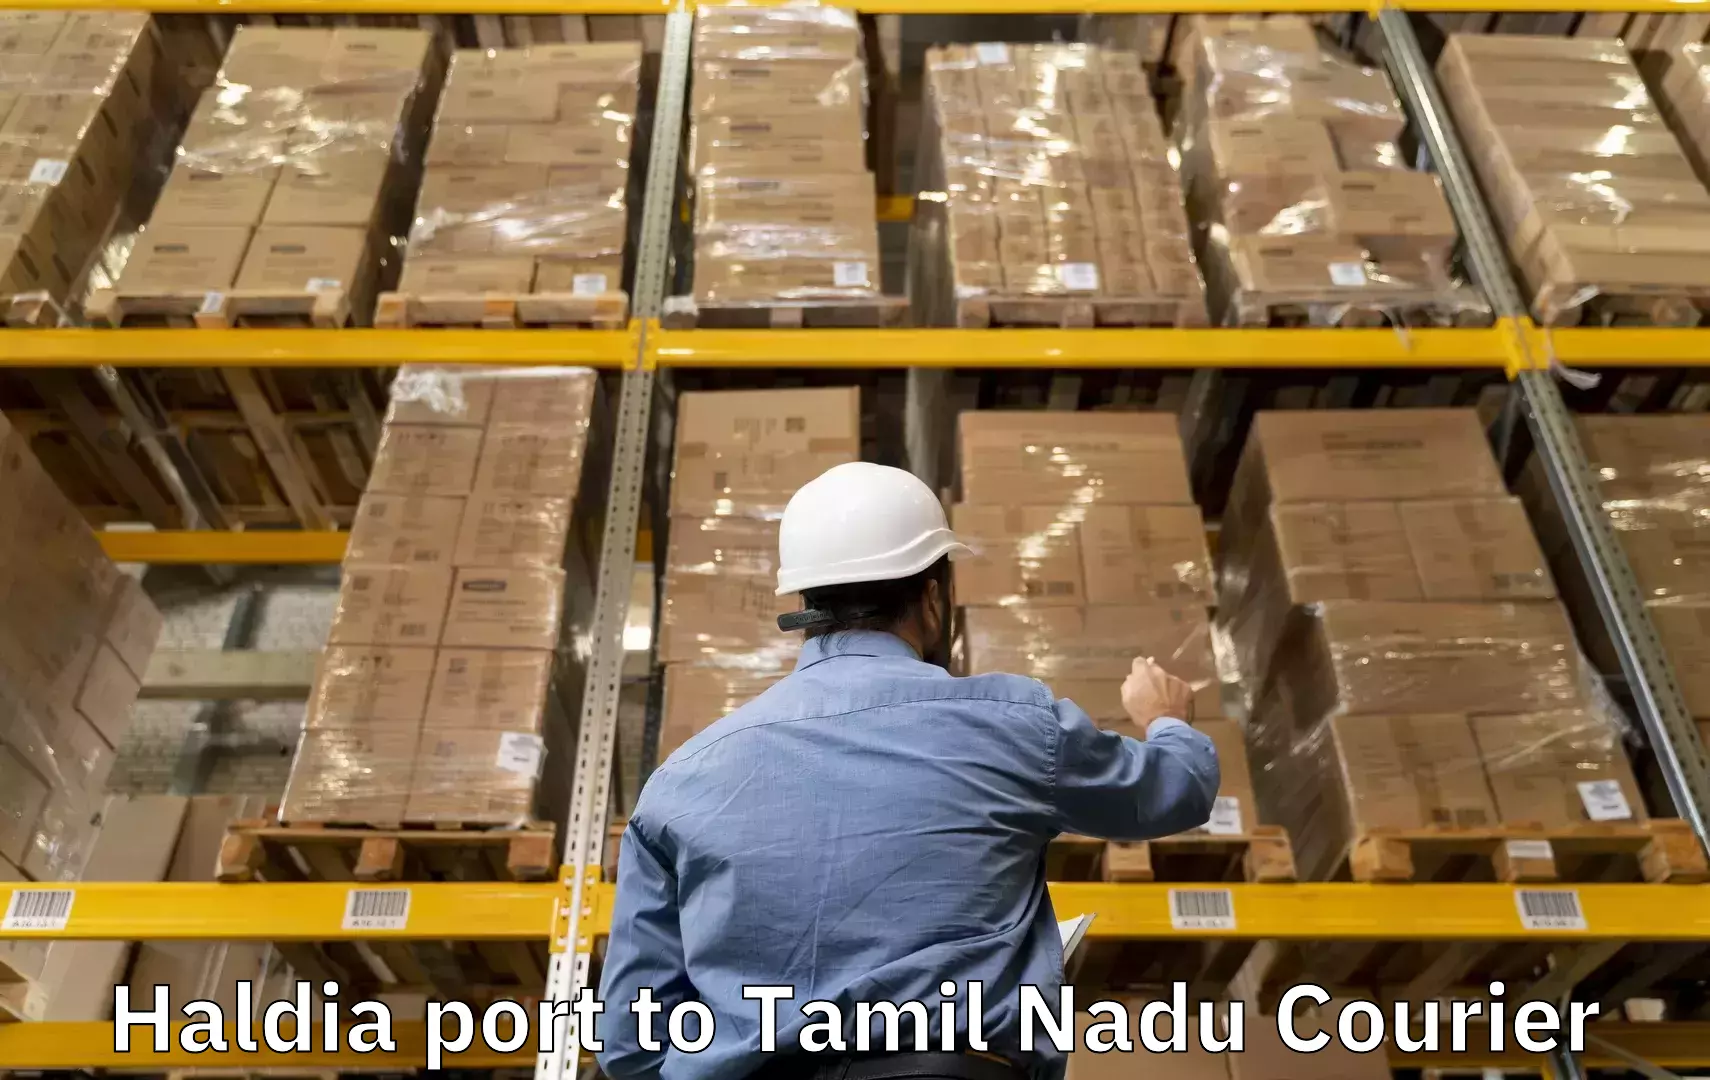 Luggage delivery app Haldia port to Panruti